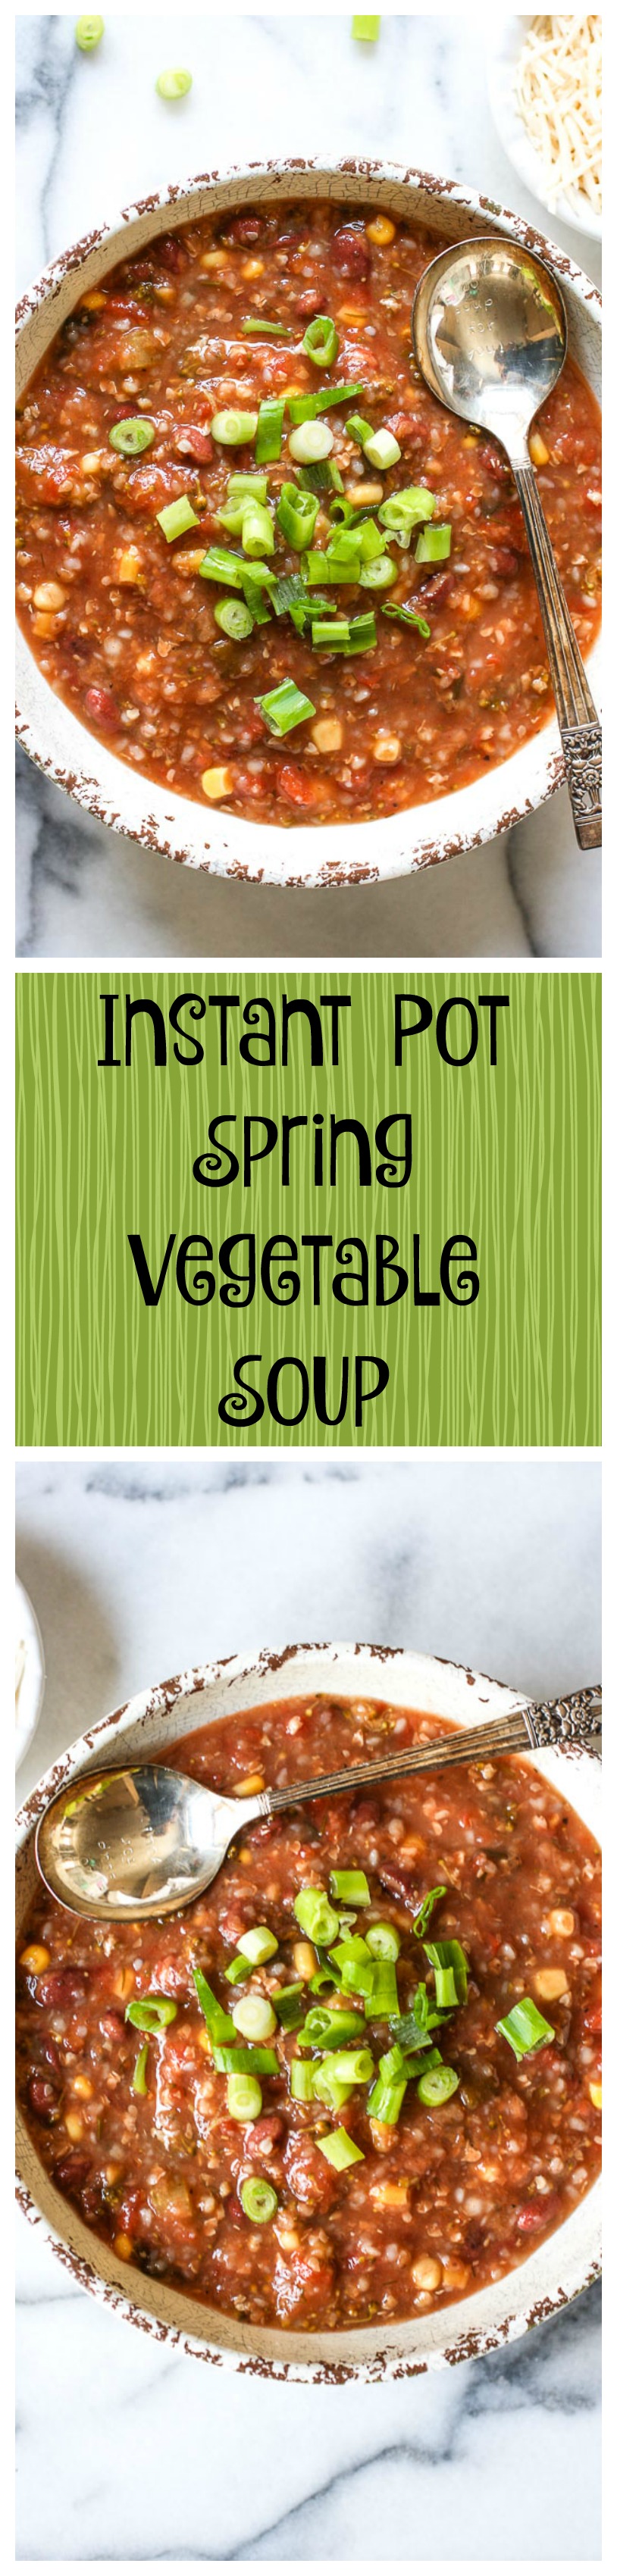 instant pot spring vegetable soup collage